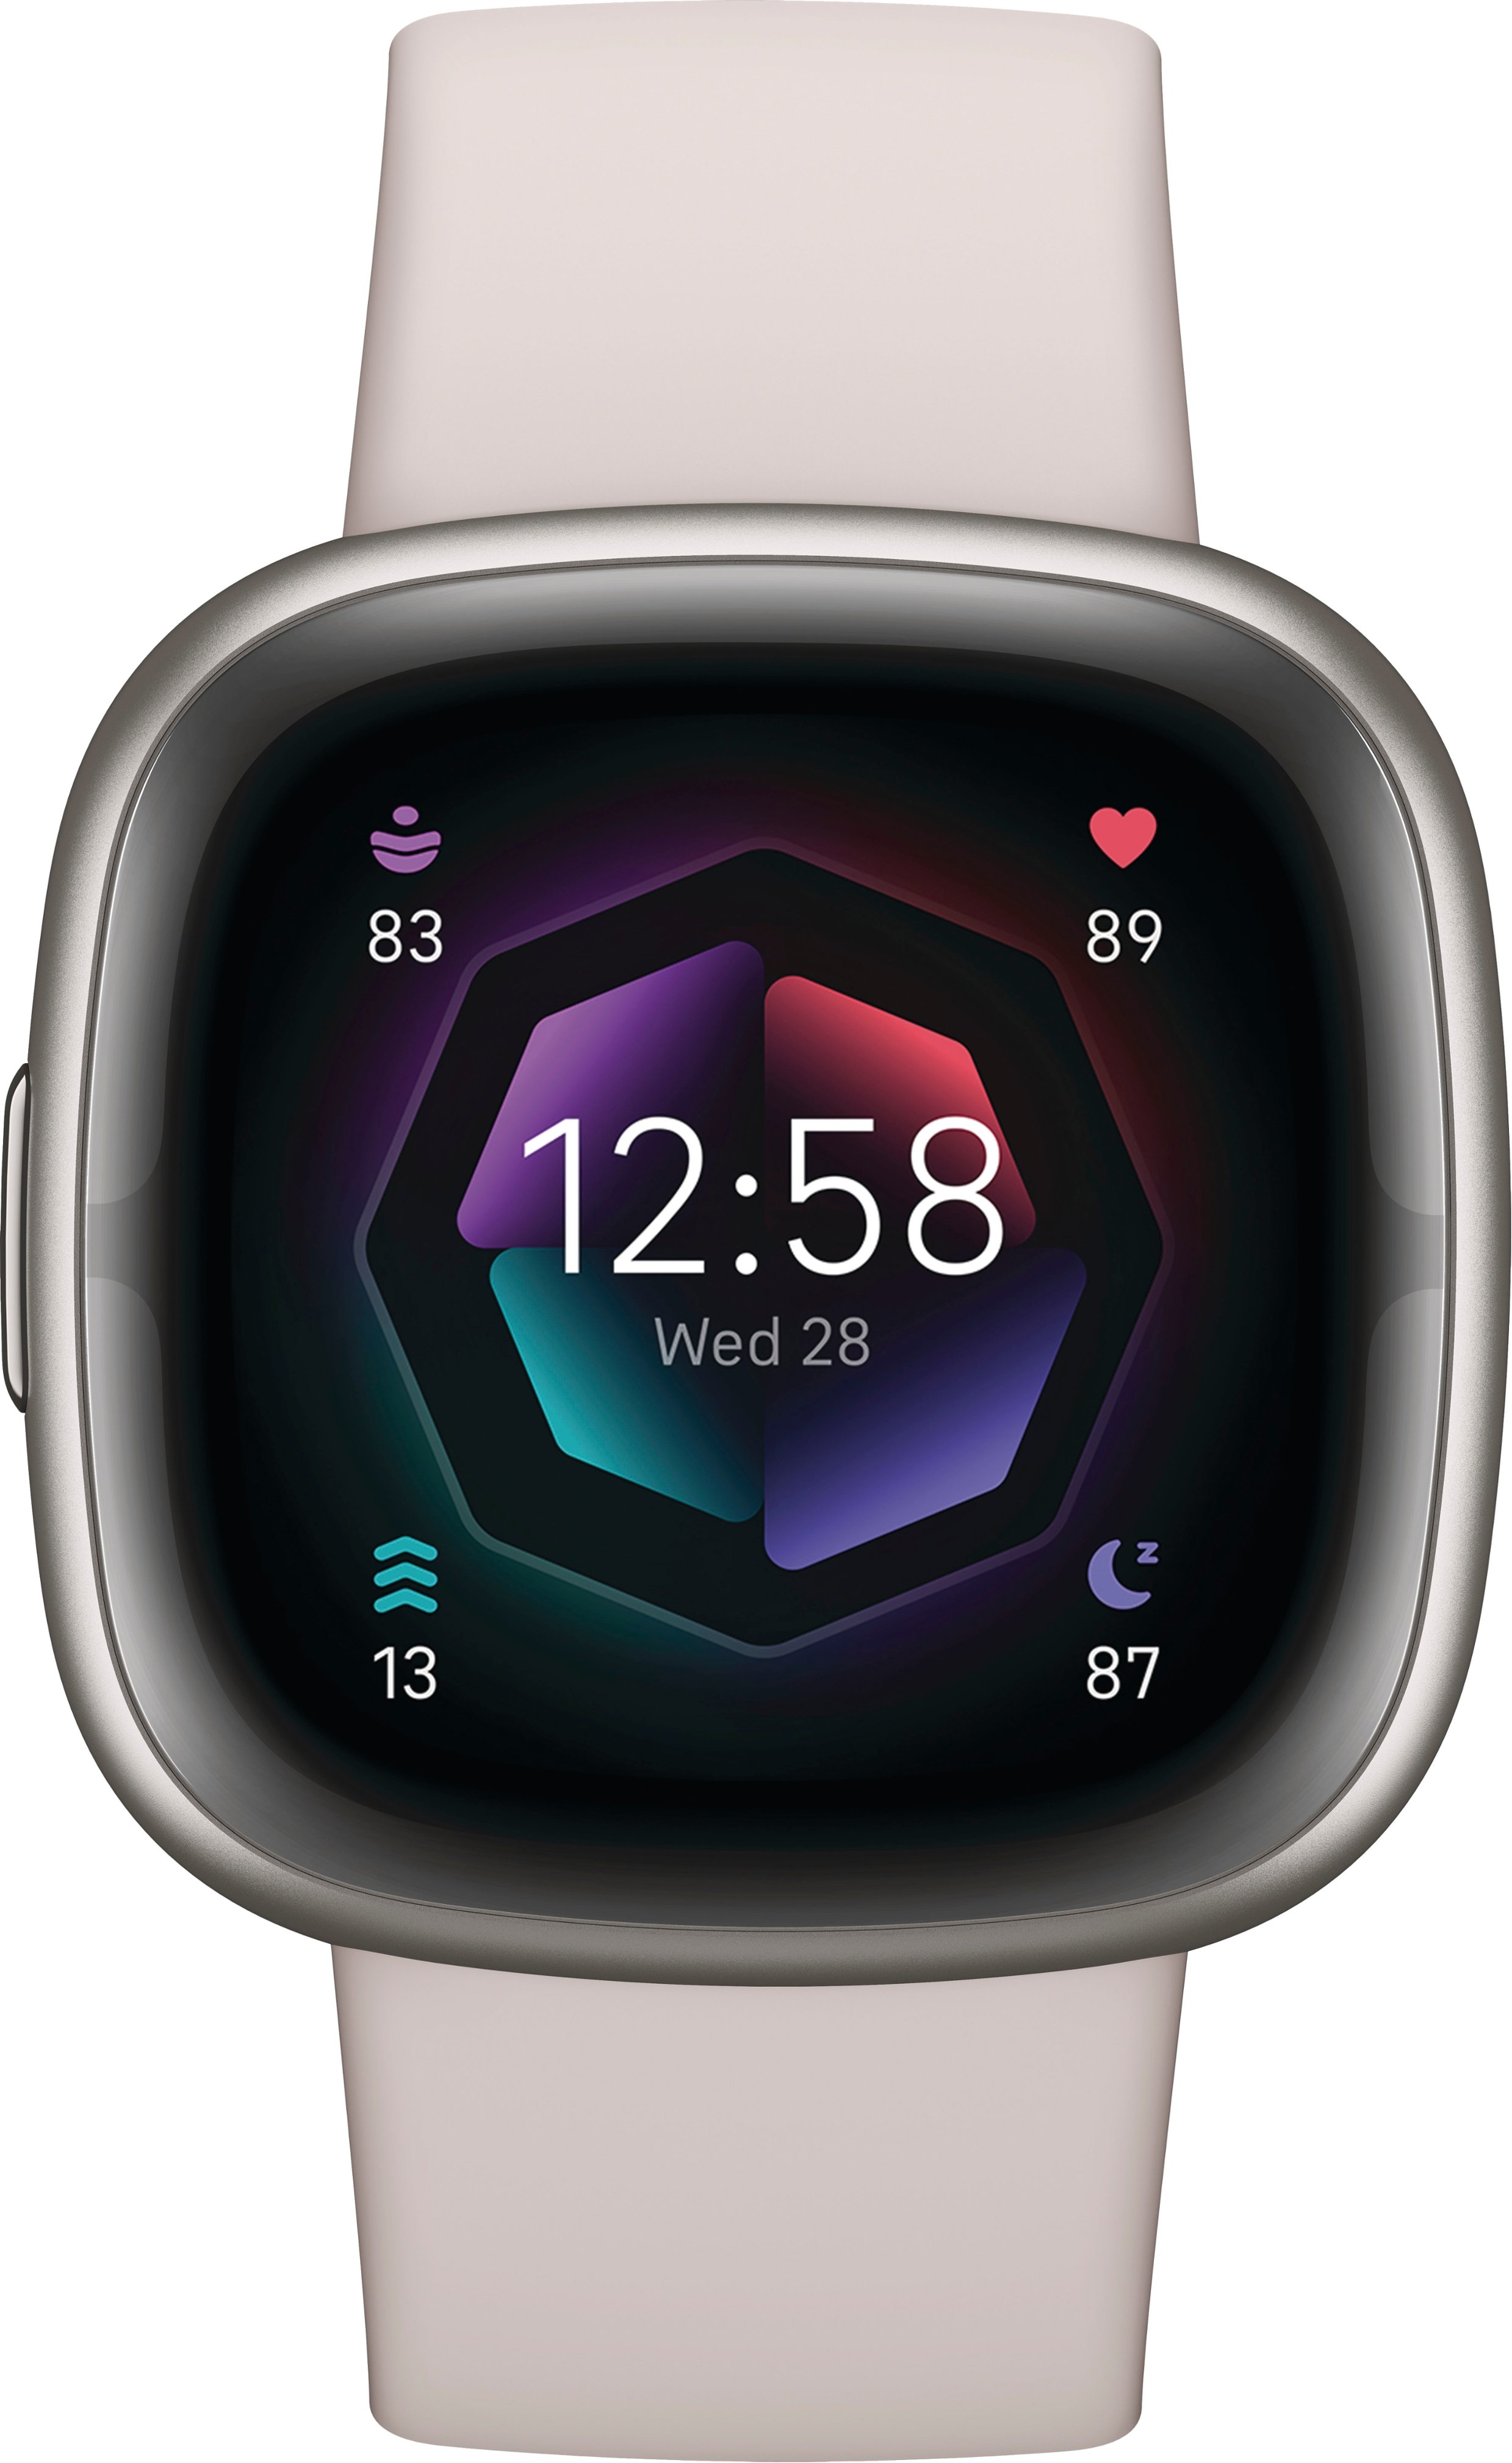 Buy Fitbit Versa Lite FB415SRGY Smart Watch at Reliance Digital-cacanhphuclong.com.vn